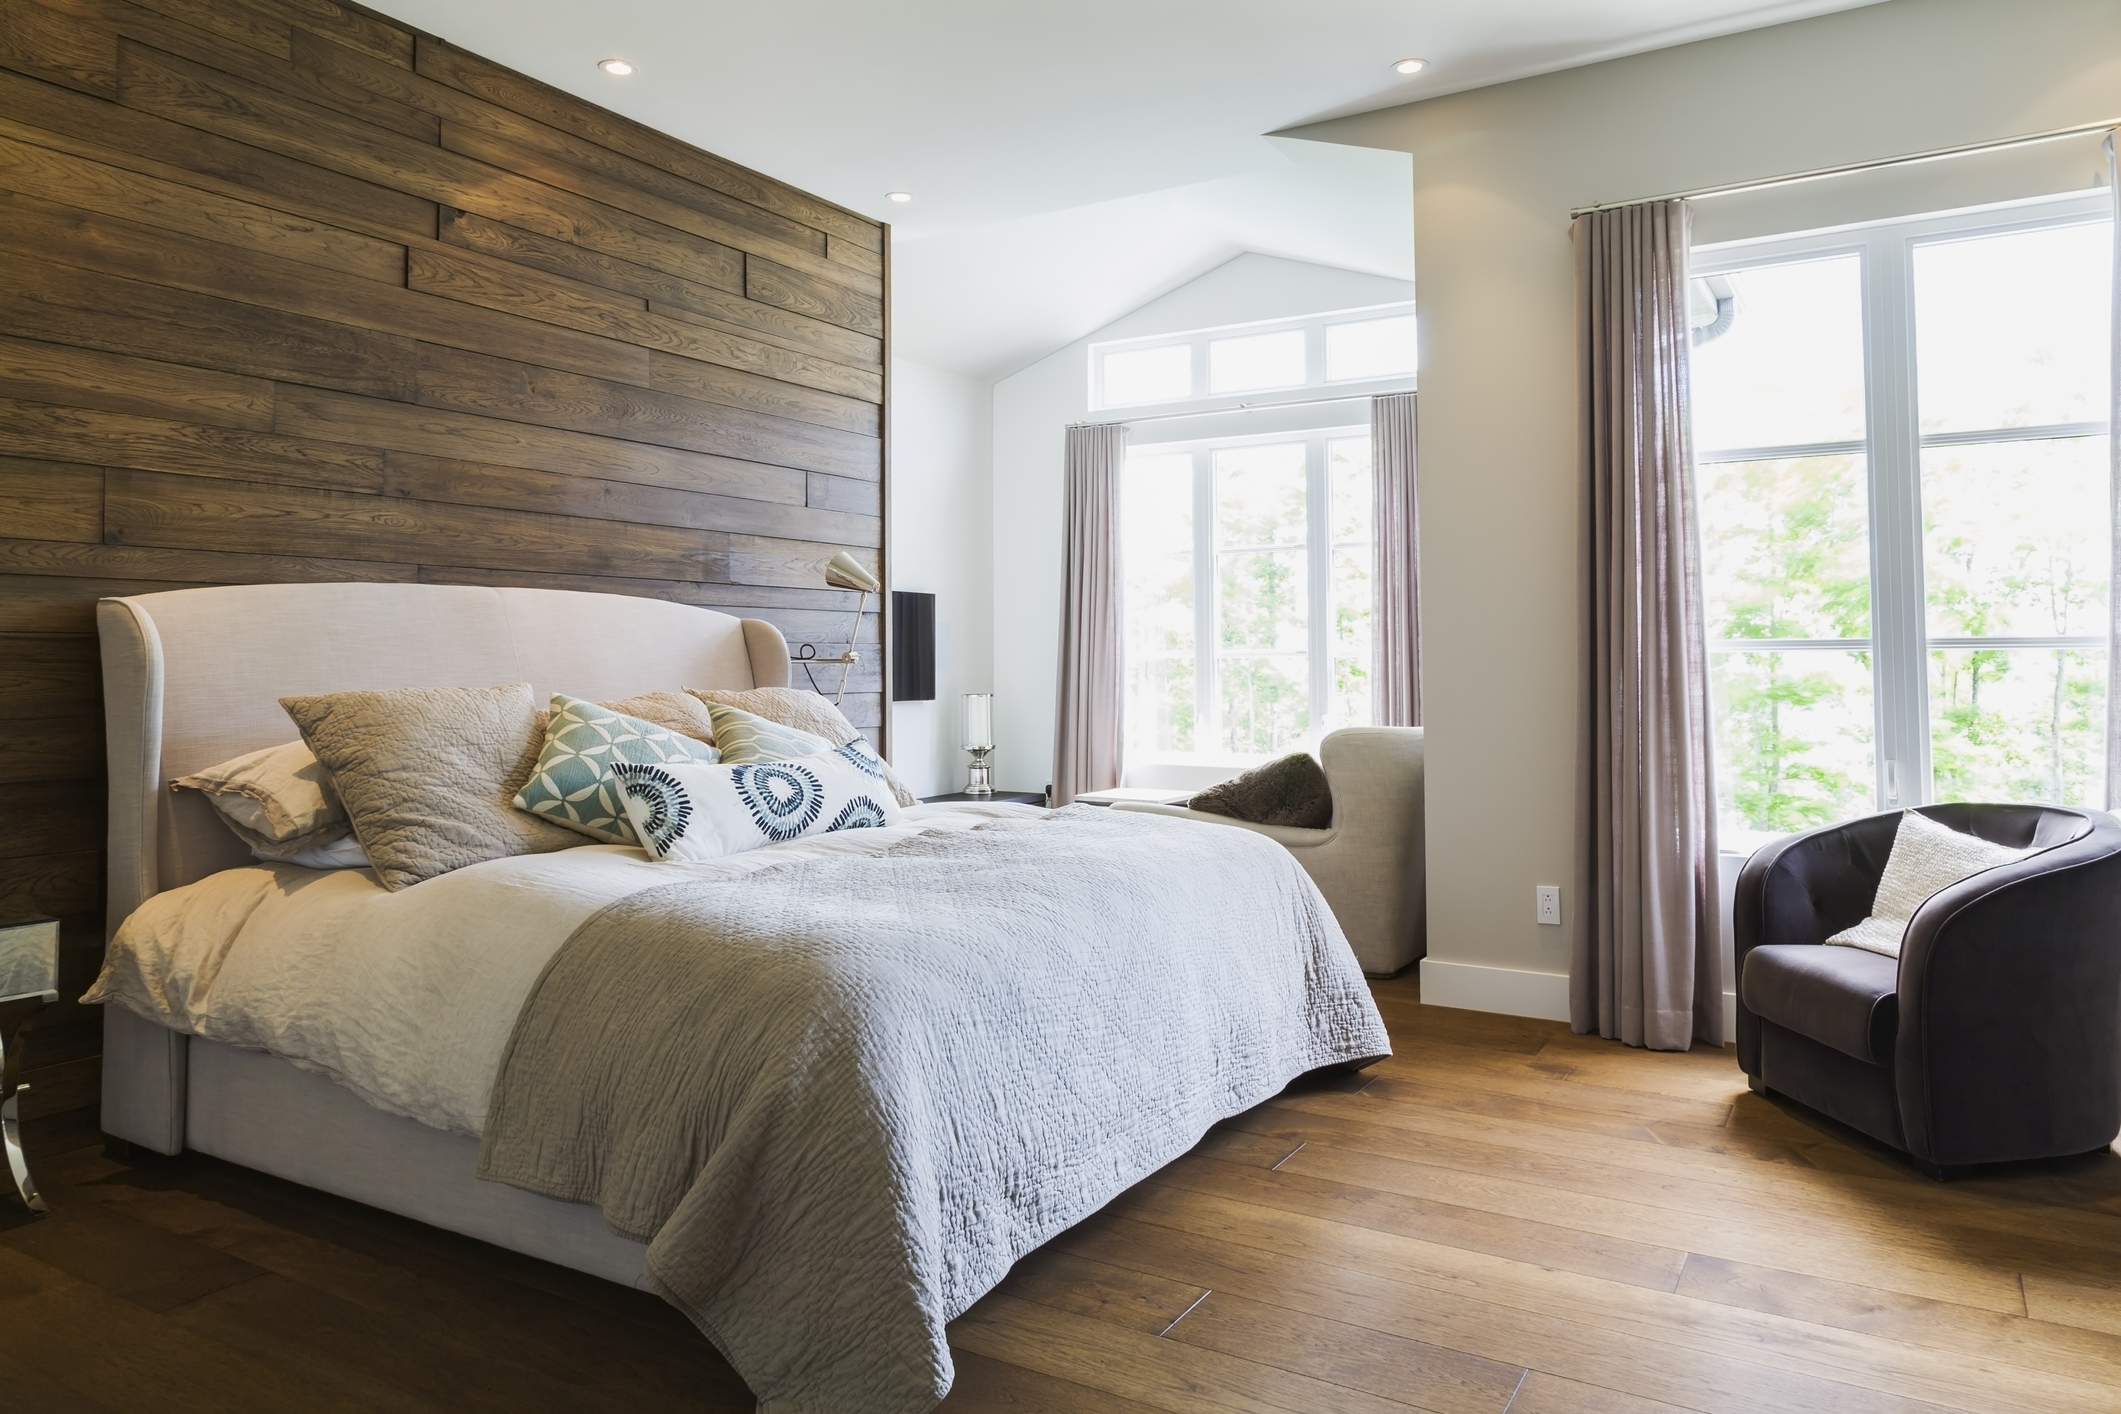 10 Budget Bedroom Decor Ideas That Won't Break the Bank - Decorilla Online  Interior Design